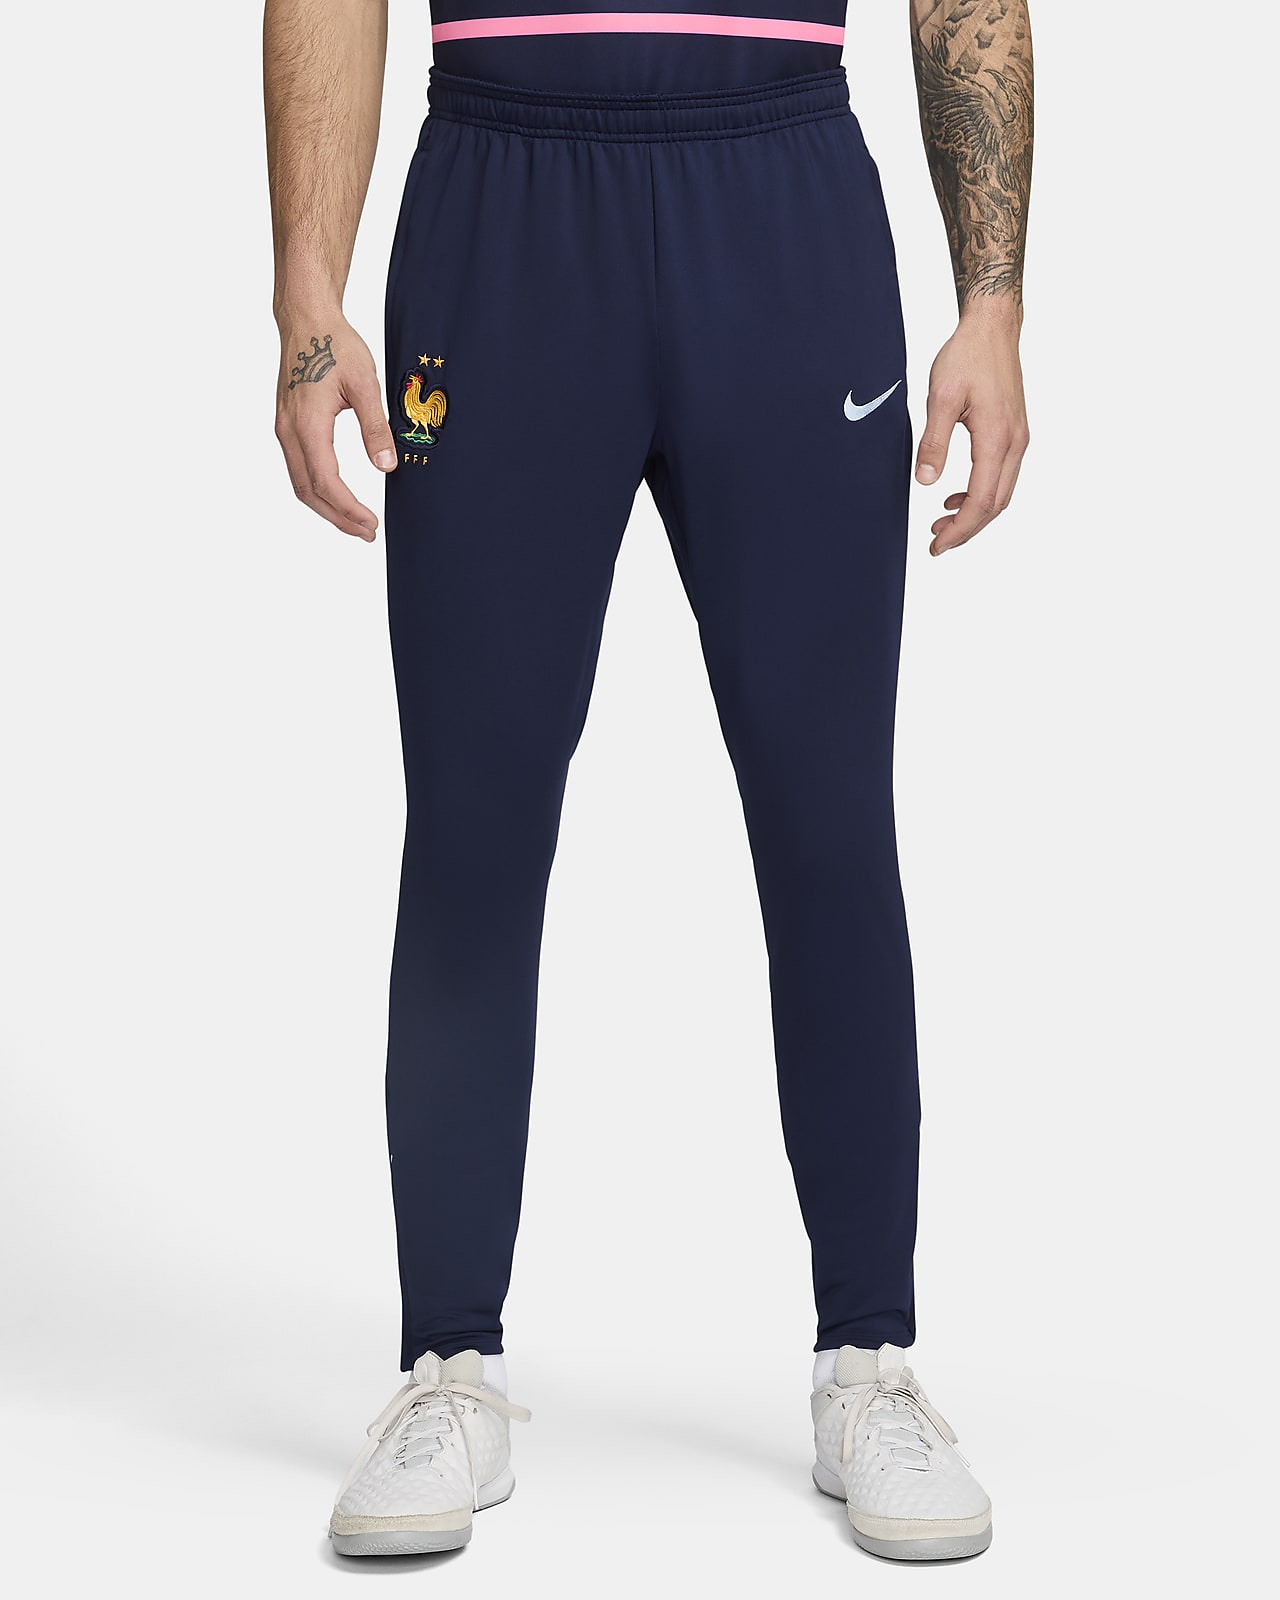 FFF Strike Men's Nike Dri-FIT Soccer Knit Pants